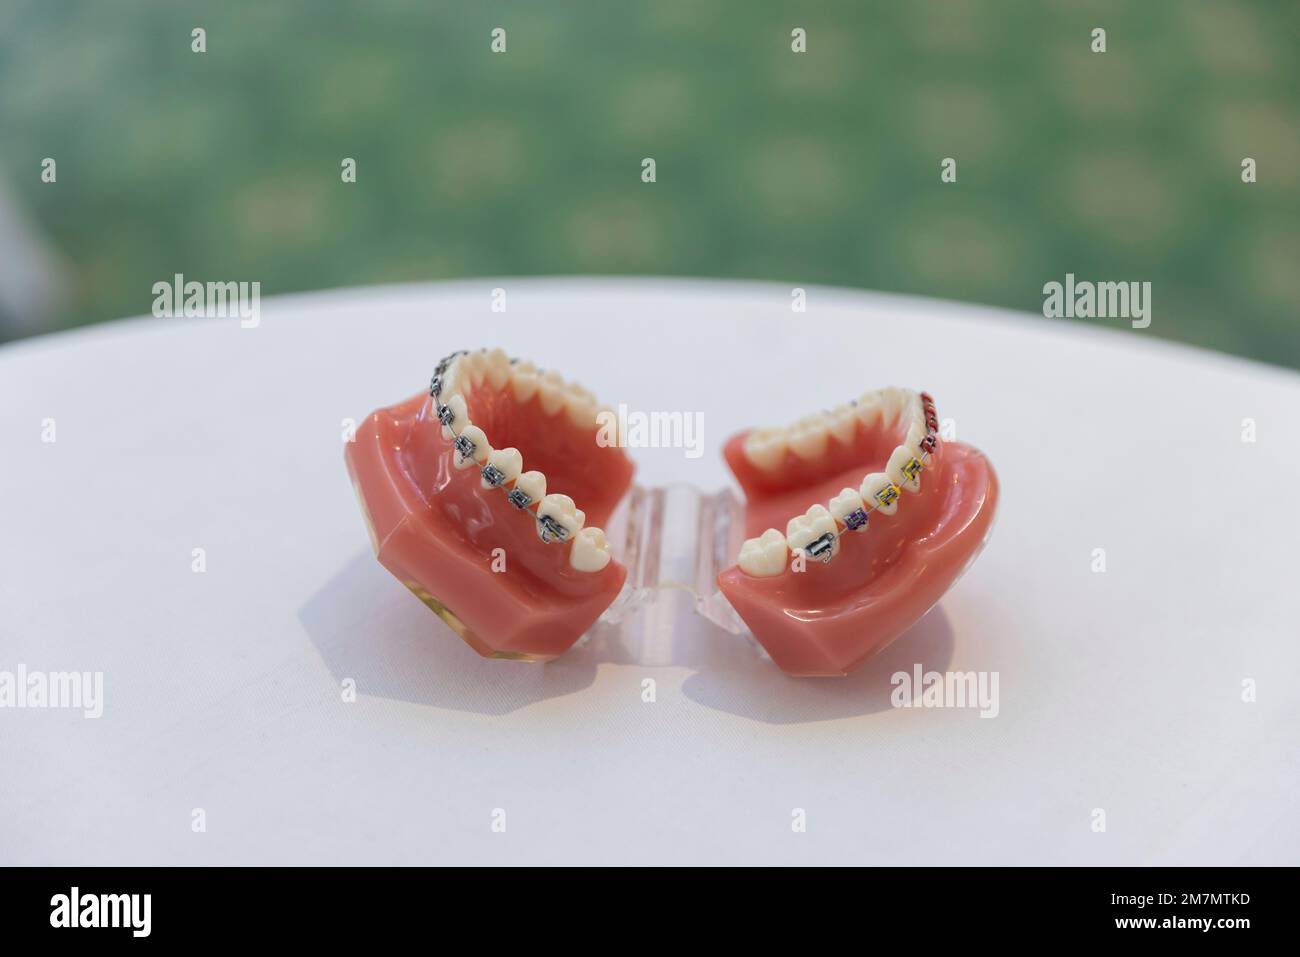 Set di denti finti Foto stock - Alamy